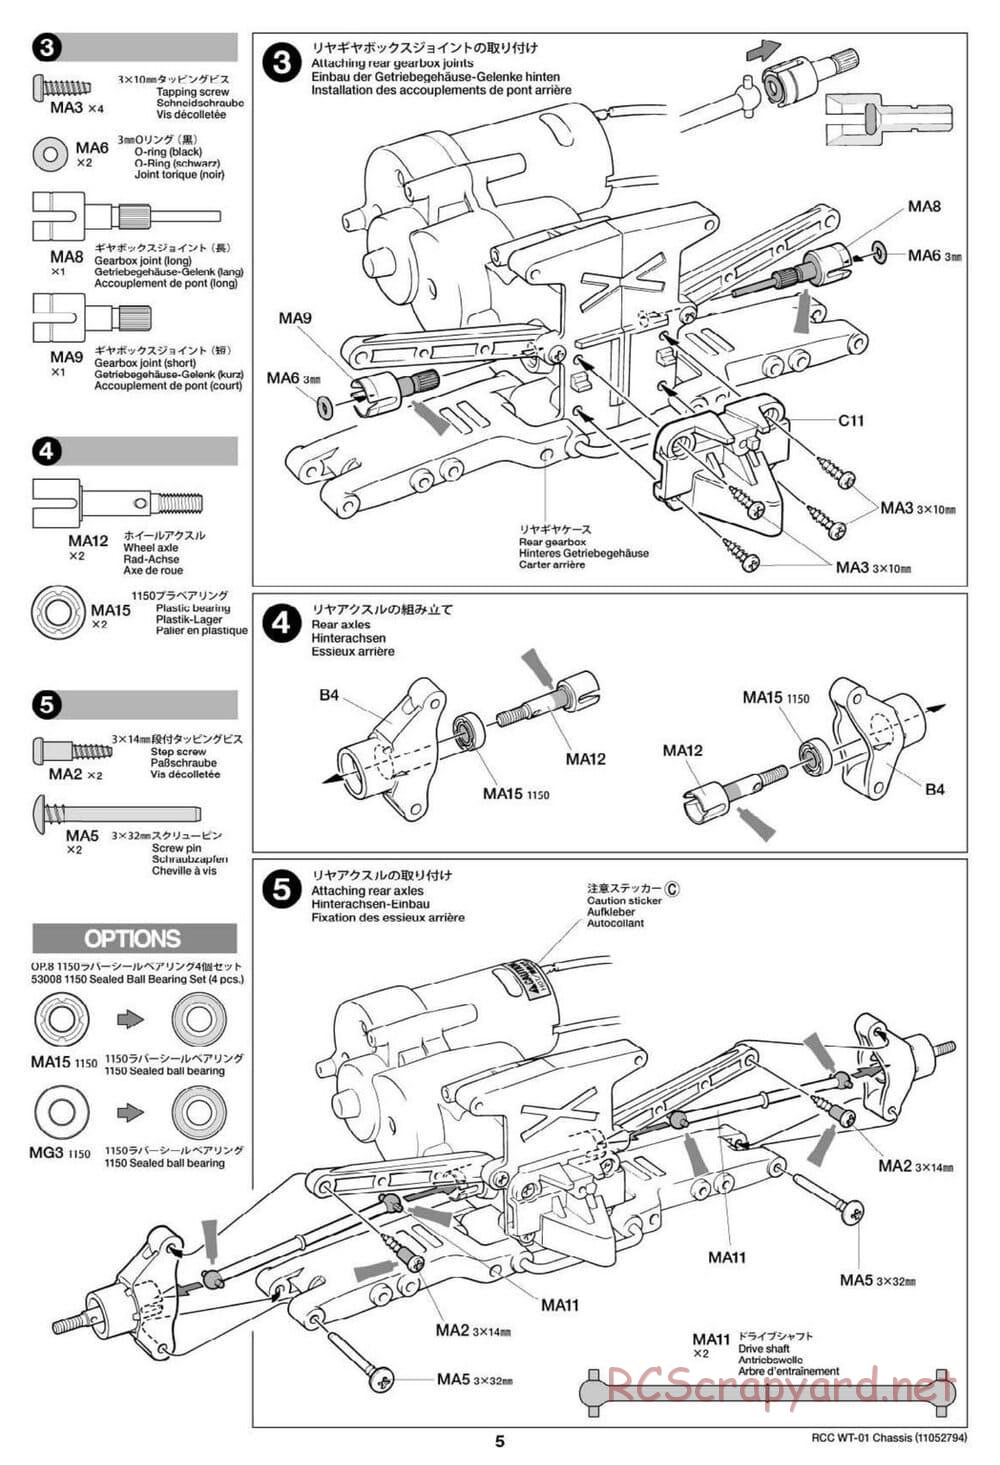 Tamiya - Mud Blaster II - WT-01 Chassis - Manual - Page 5